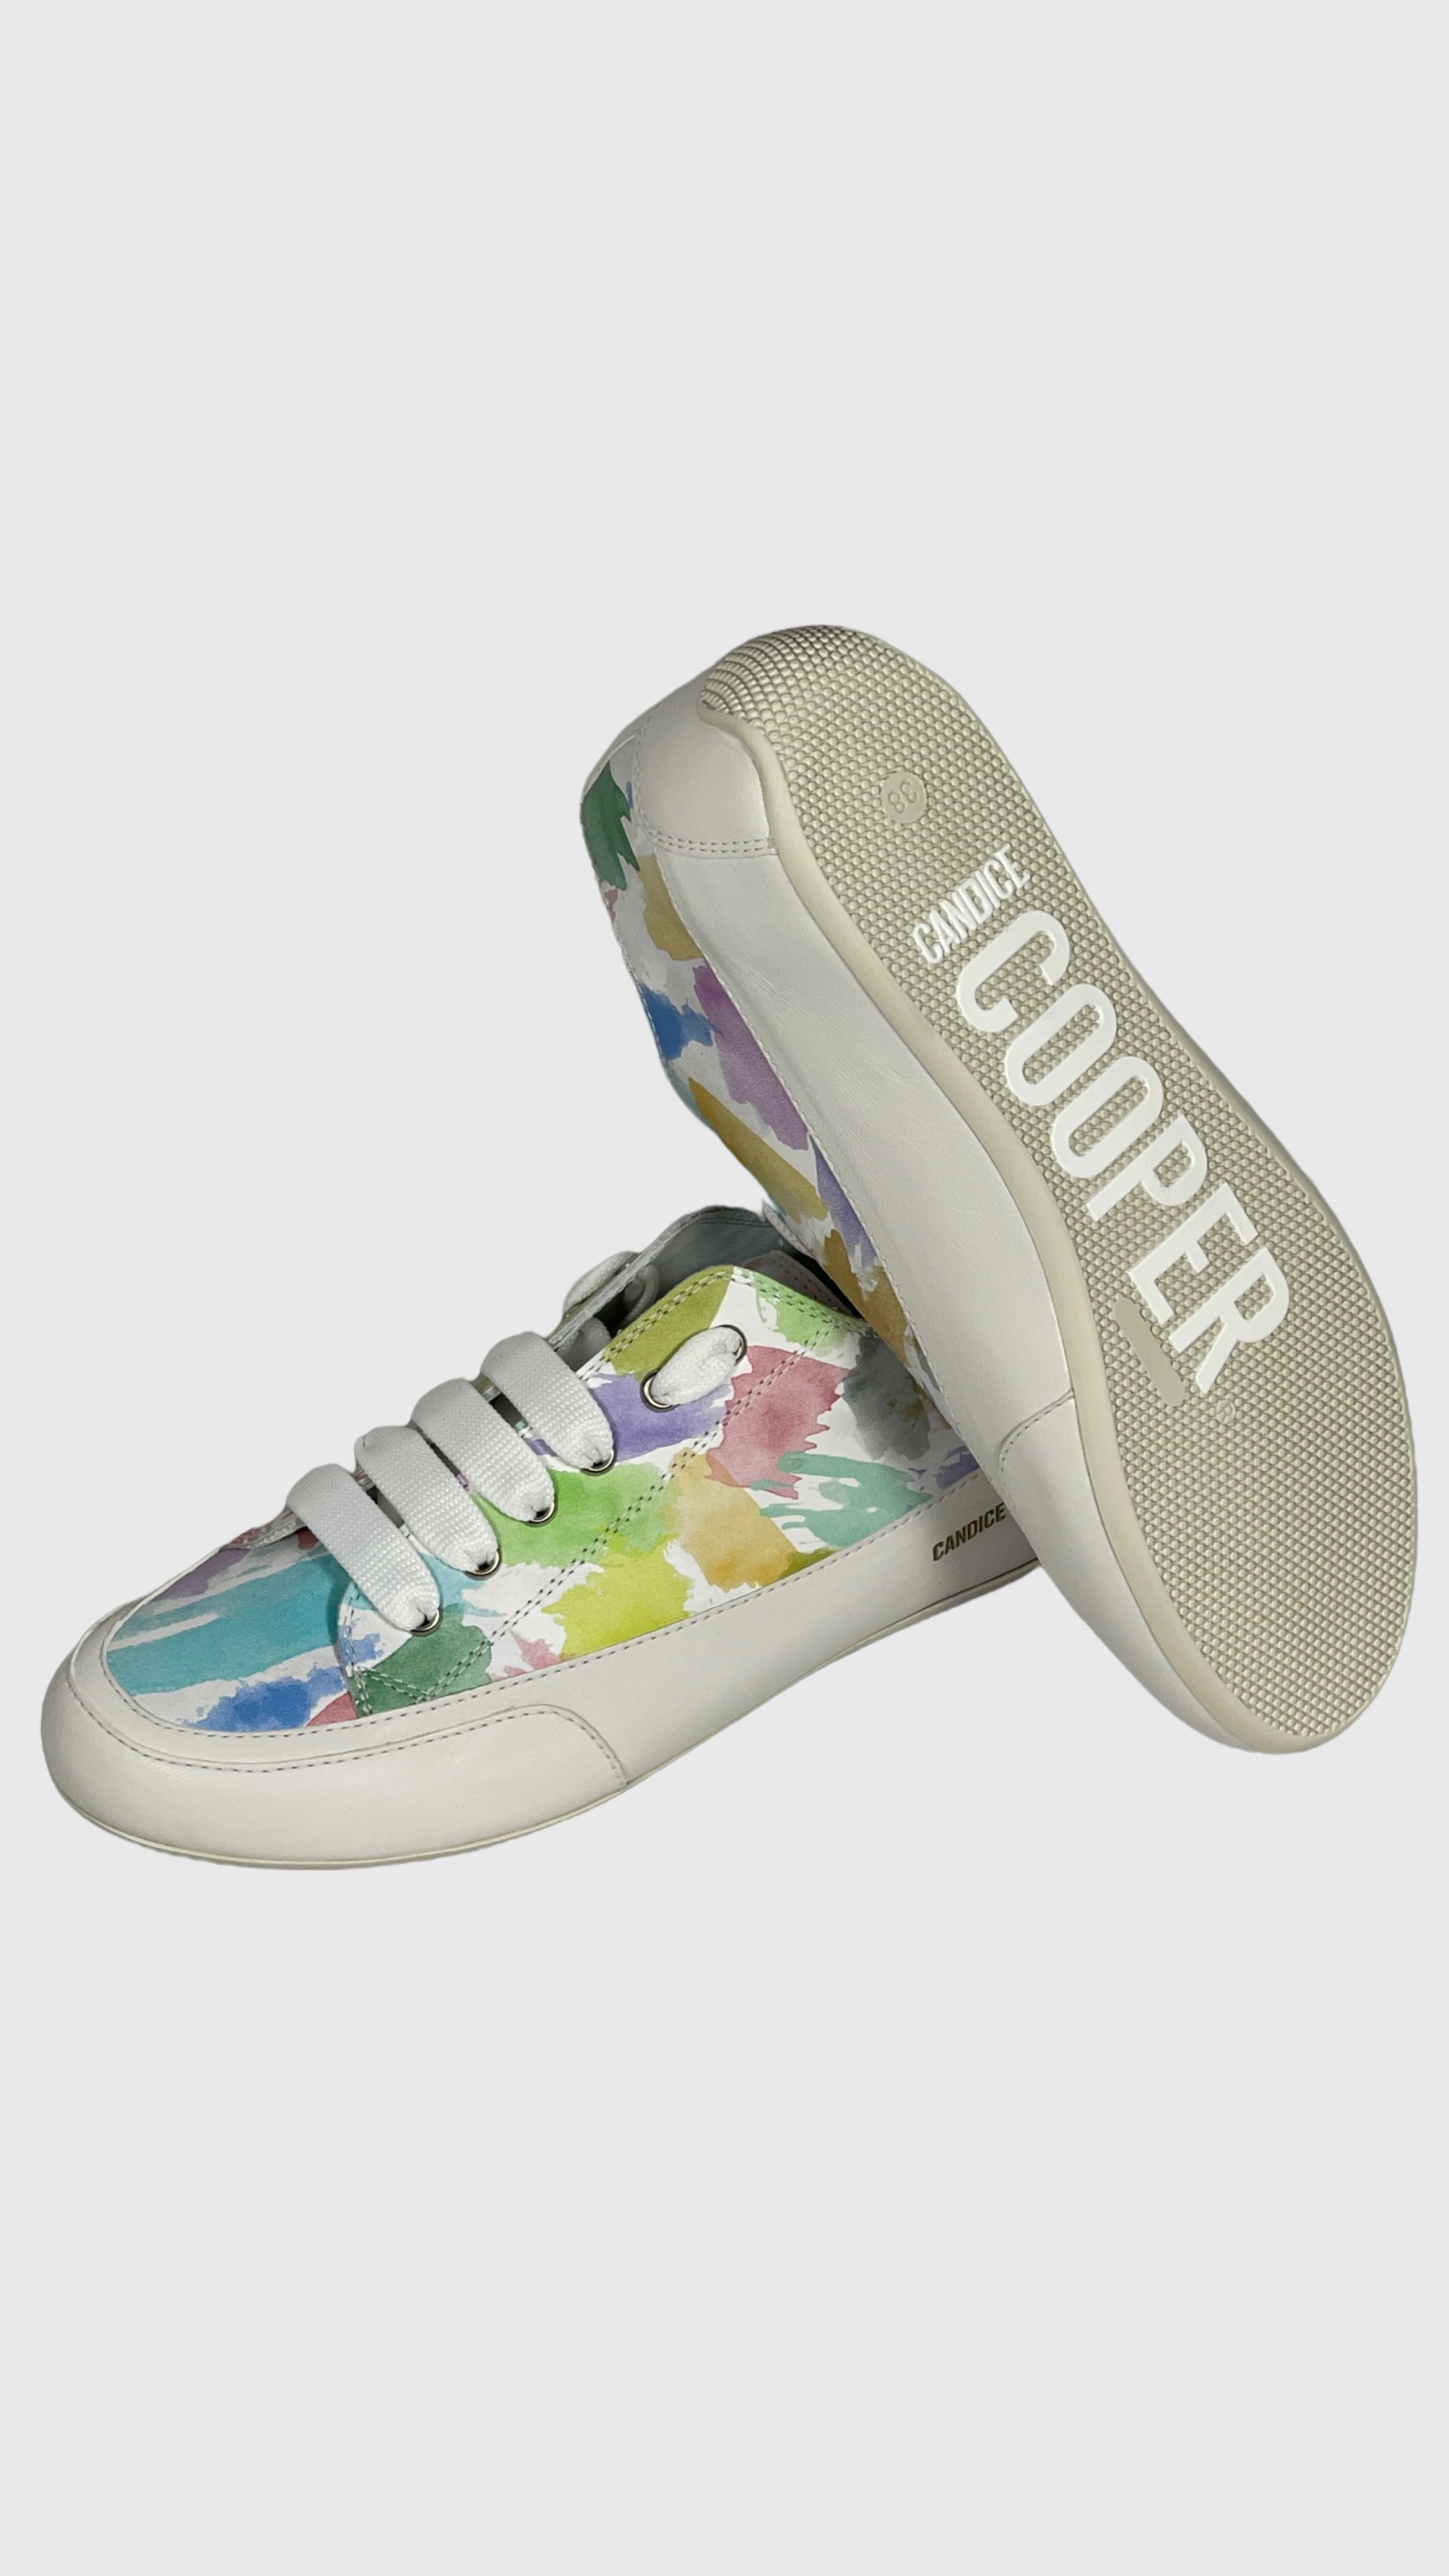 CANDICE COOPER 2016534-06 Damen Sneakers Multicolor 1N69